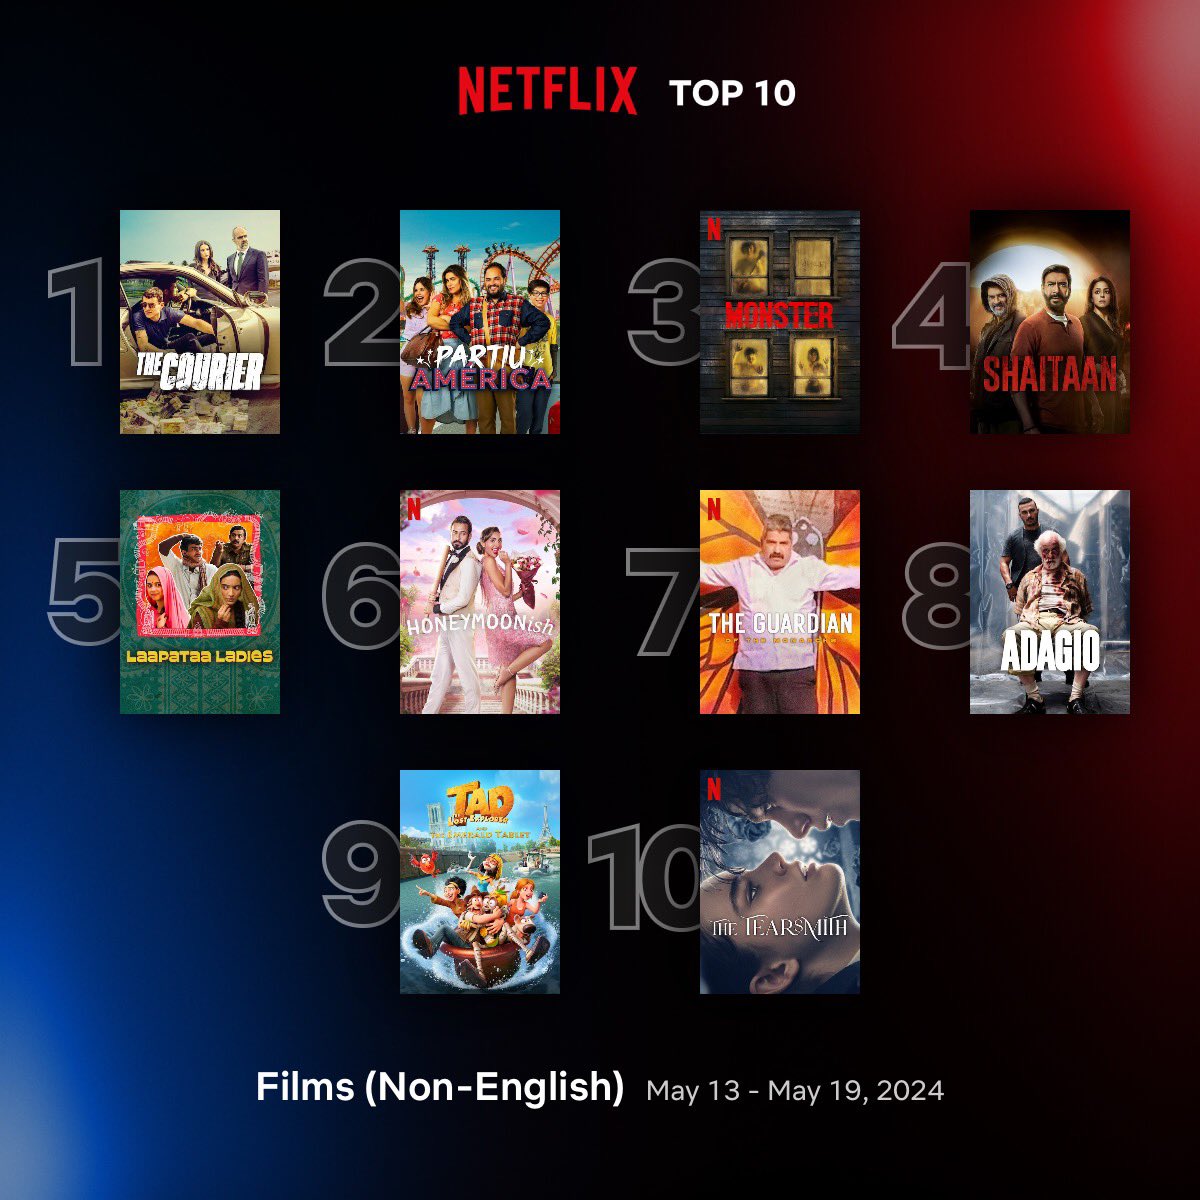 Global Top 10 Non-English Films on Netflix between 13 - 19 May 1. #TheCourier / #ElCorreo 🇪🇸 🇧🇪 🇫🇷 2. #PartiuAmerica 🇧🇷 3. #Monster 🇮🇩 4. #Shaitaan 🇮🇳 5. #LaapataaLadies 🇮🇳 6. #Honeymoonish 🇰🇼 7. #TheGuardianOfTheMonarchs 🇲🇽 8. #Adagio 🇮🇹 9.